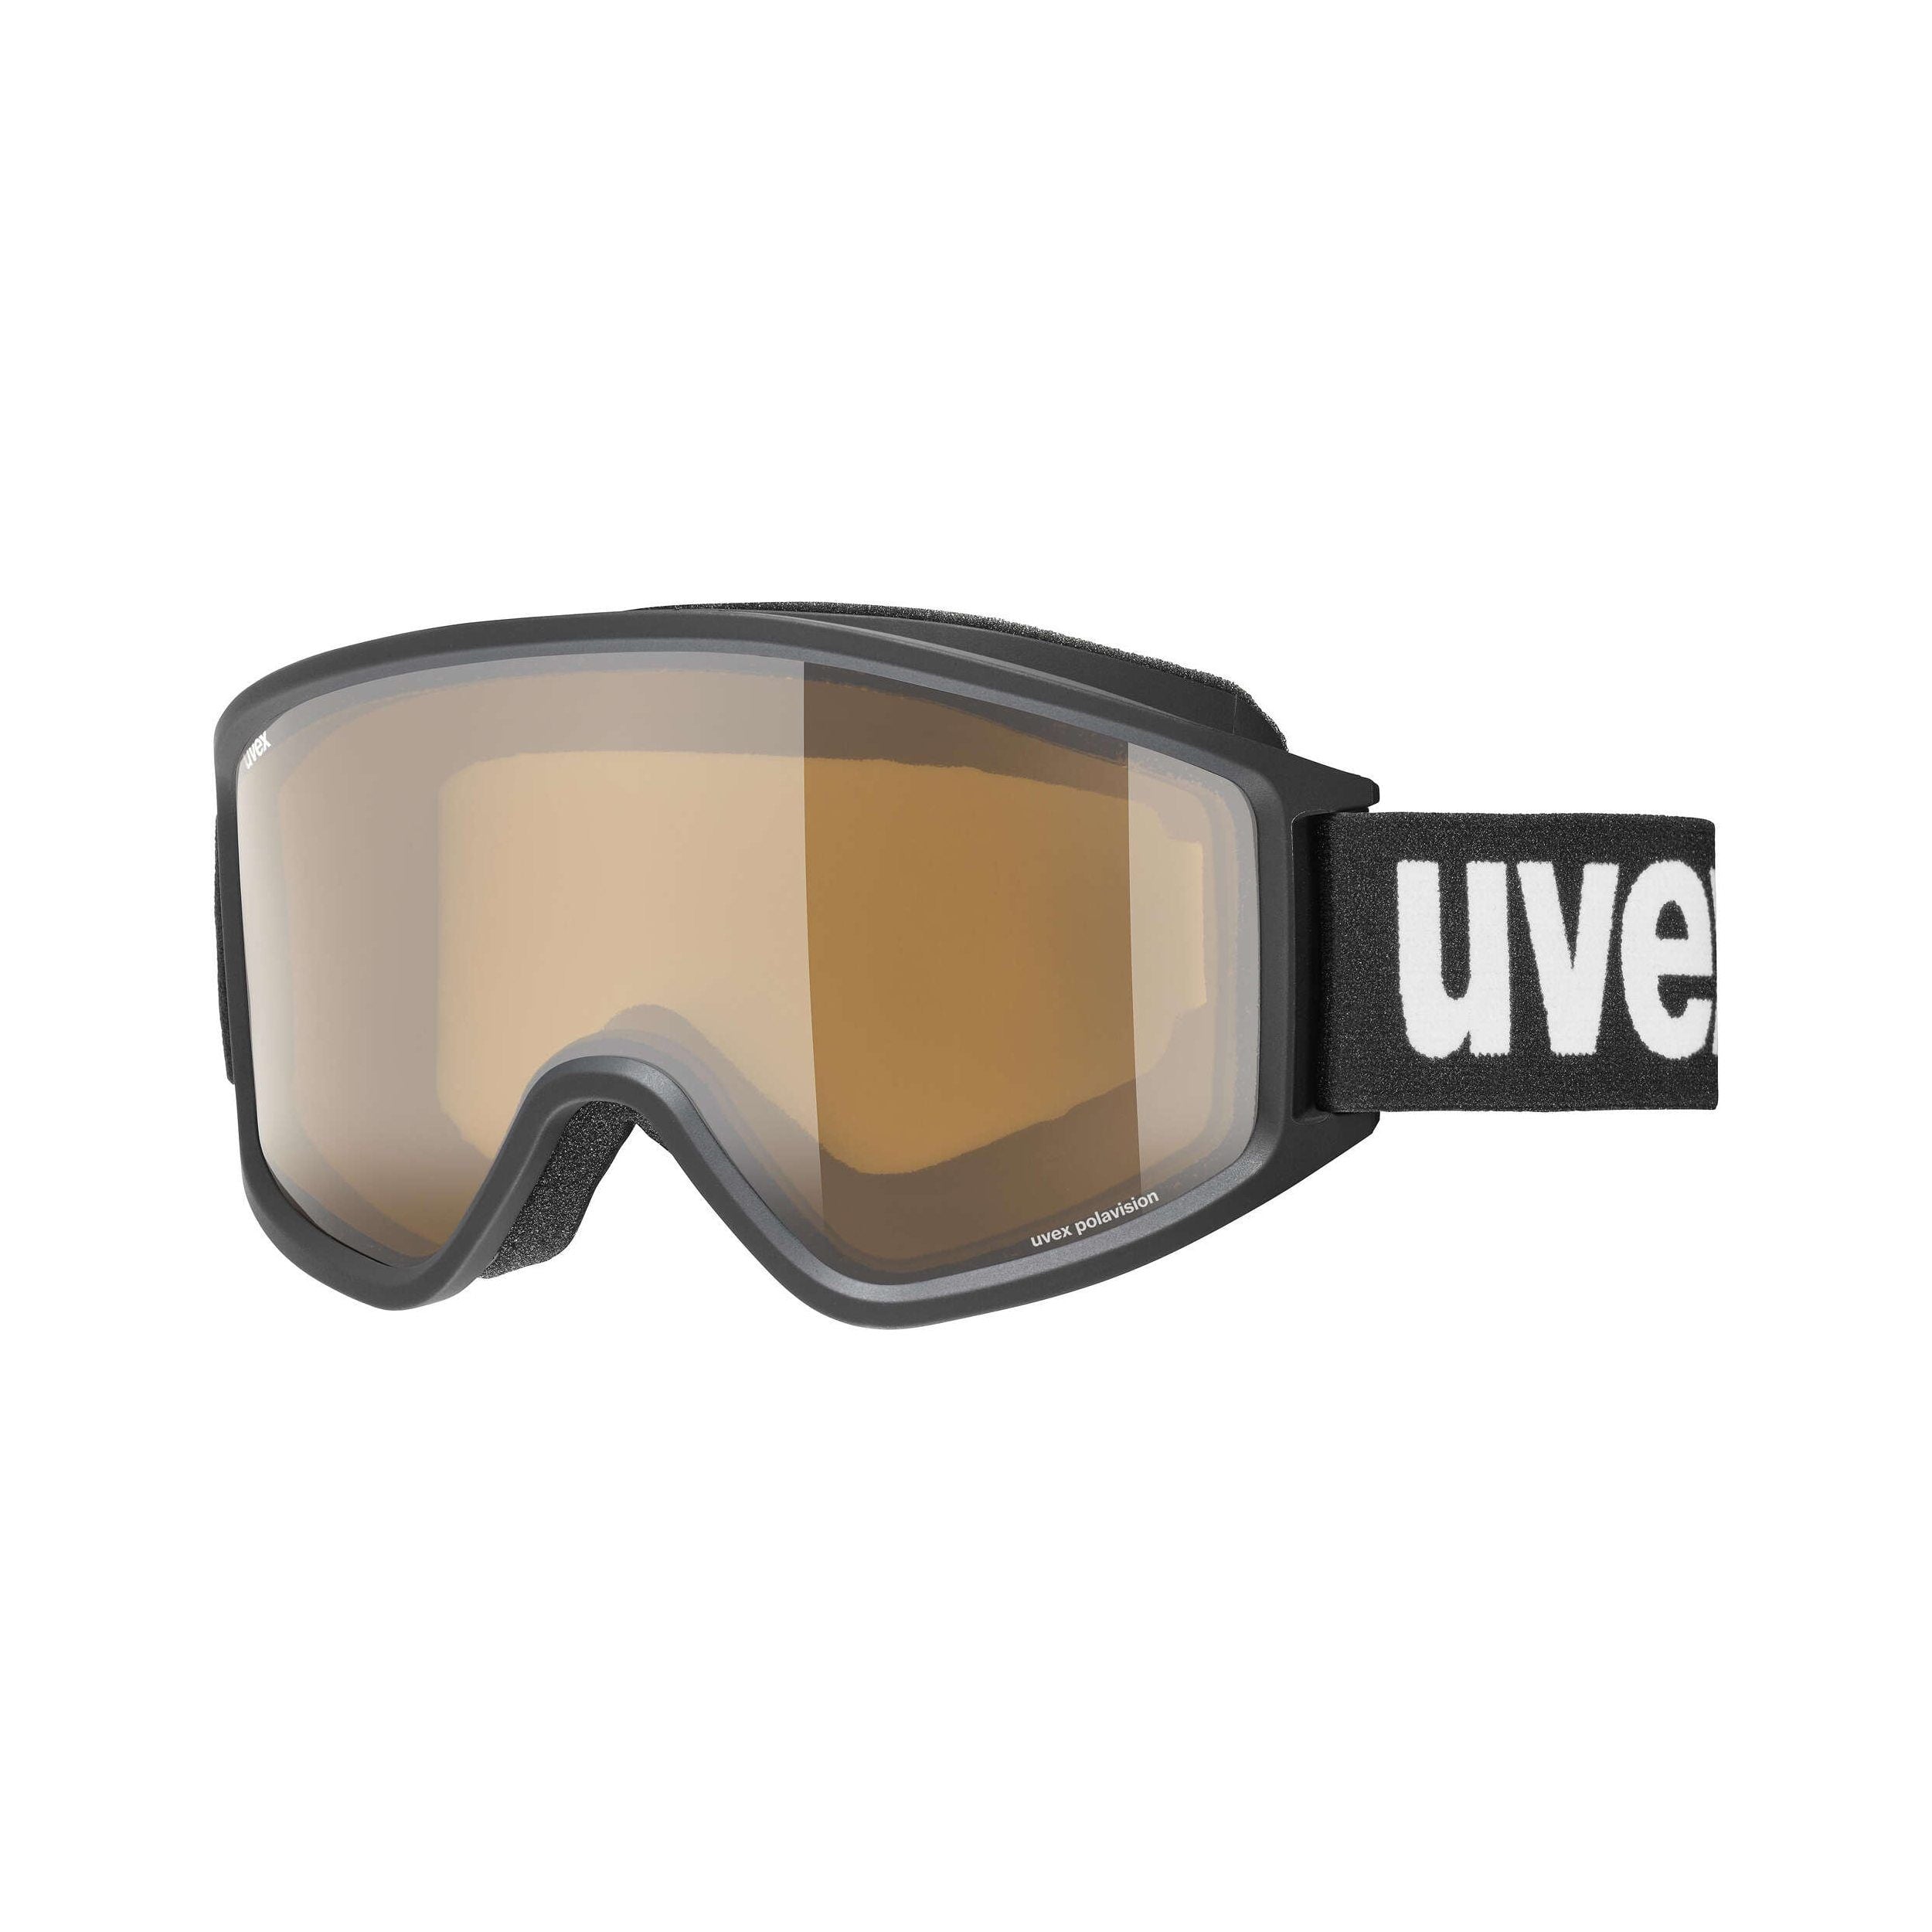 uvex-gogle-narciarskie-g-gl-3000-p-black